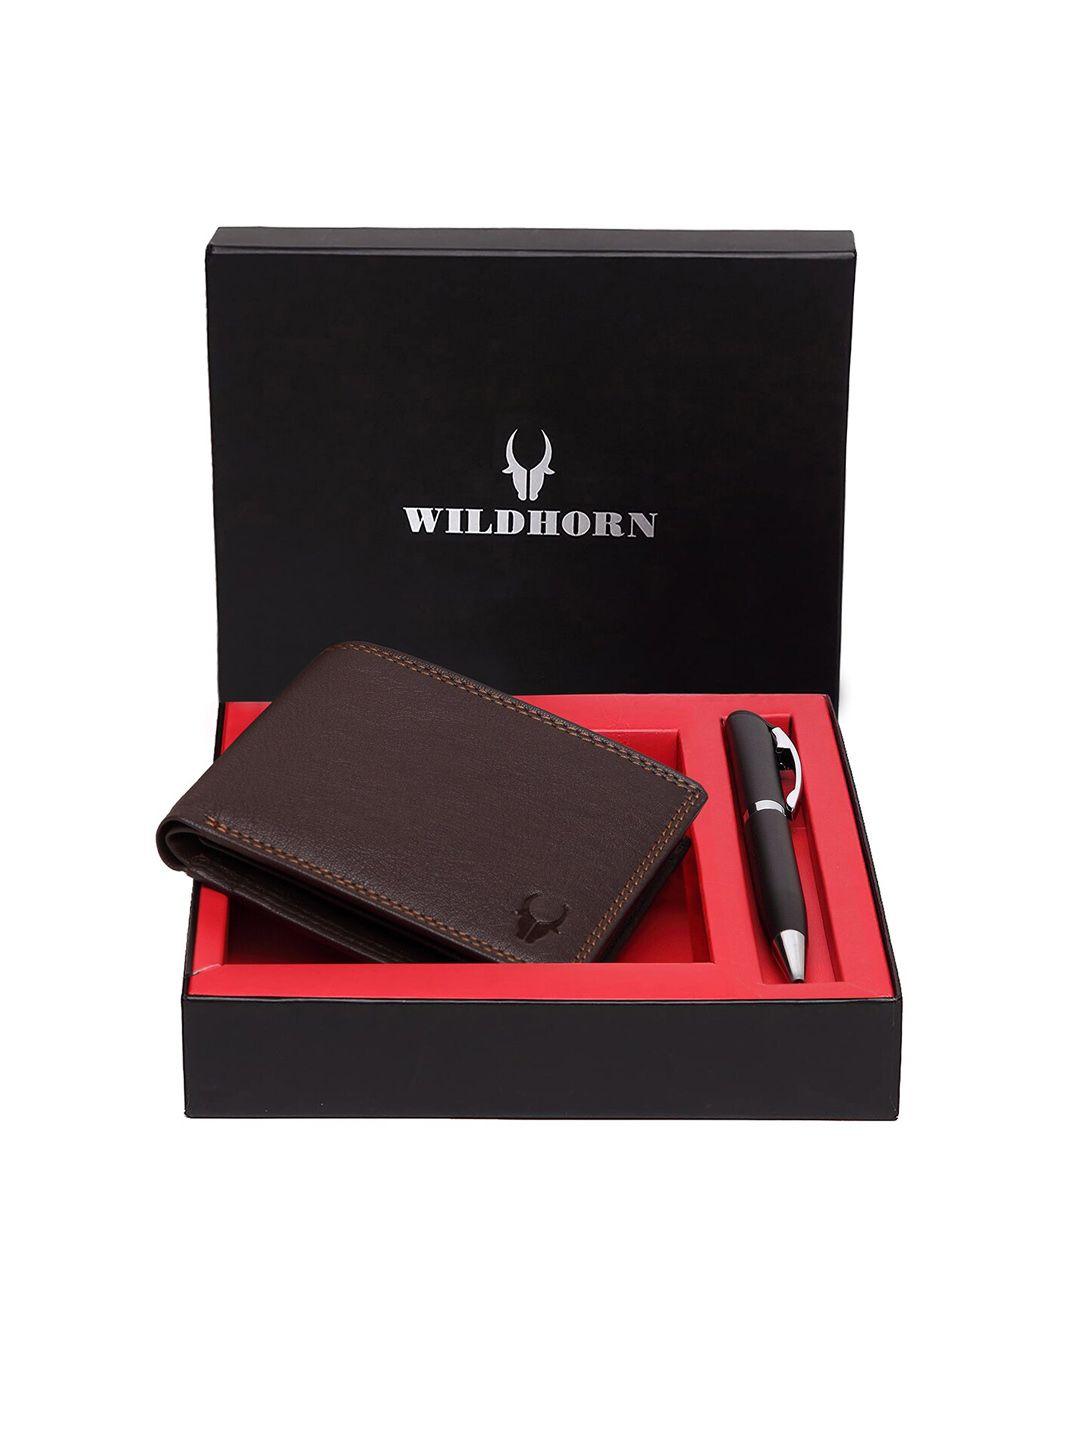 wildhorn men brown & black rfid protected genuine leather wallet & pen accessory gift set